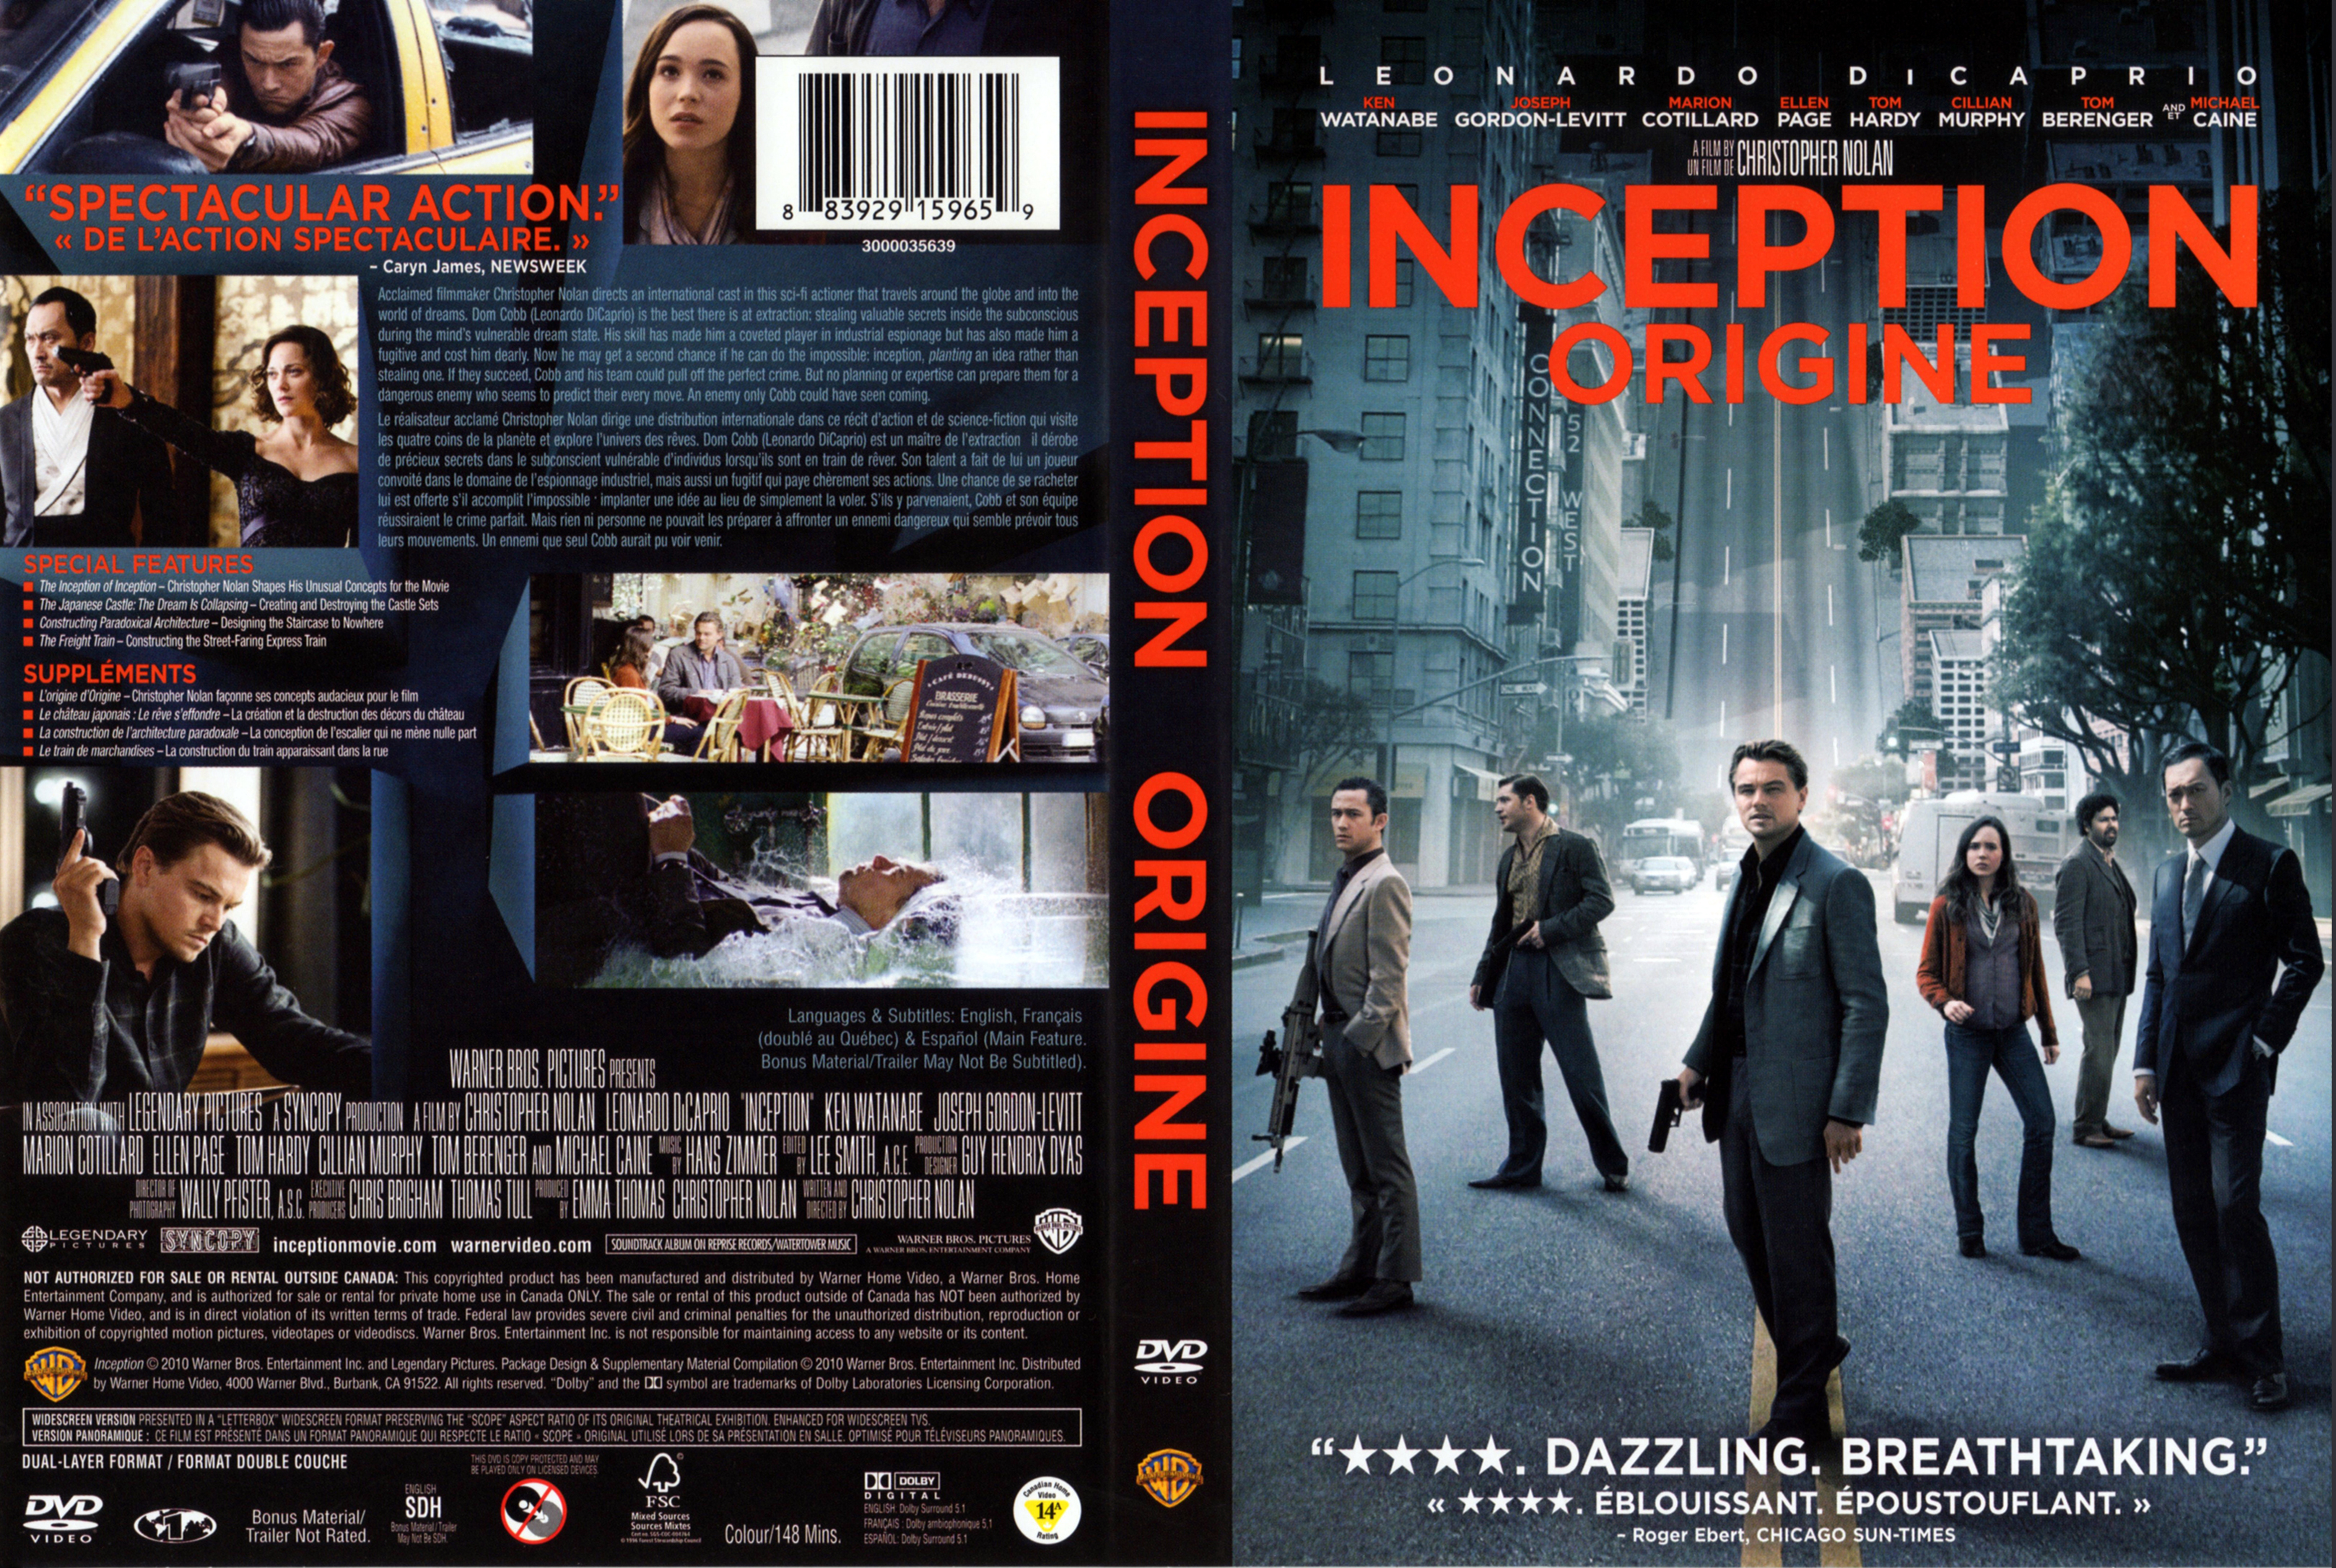 Jaquette DVD Inception Origine (Canadienne)